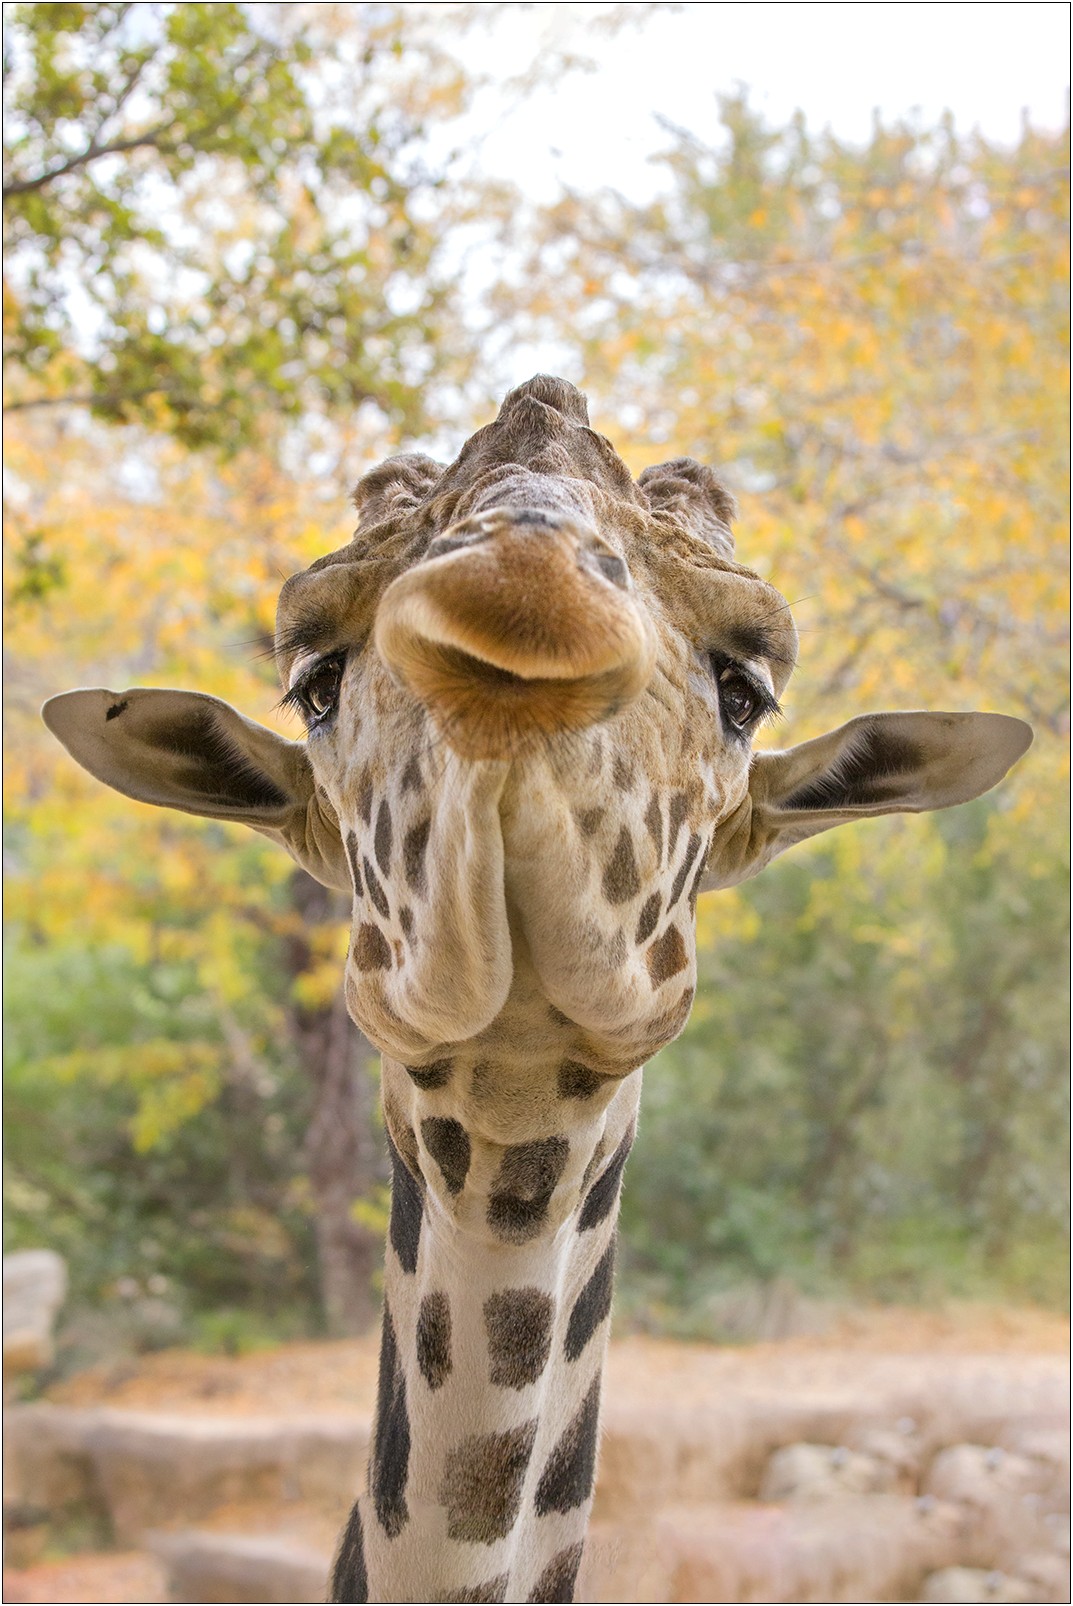 Giraffe Feeding Station Attendant Resume Objective